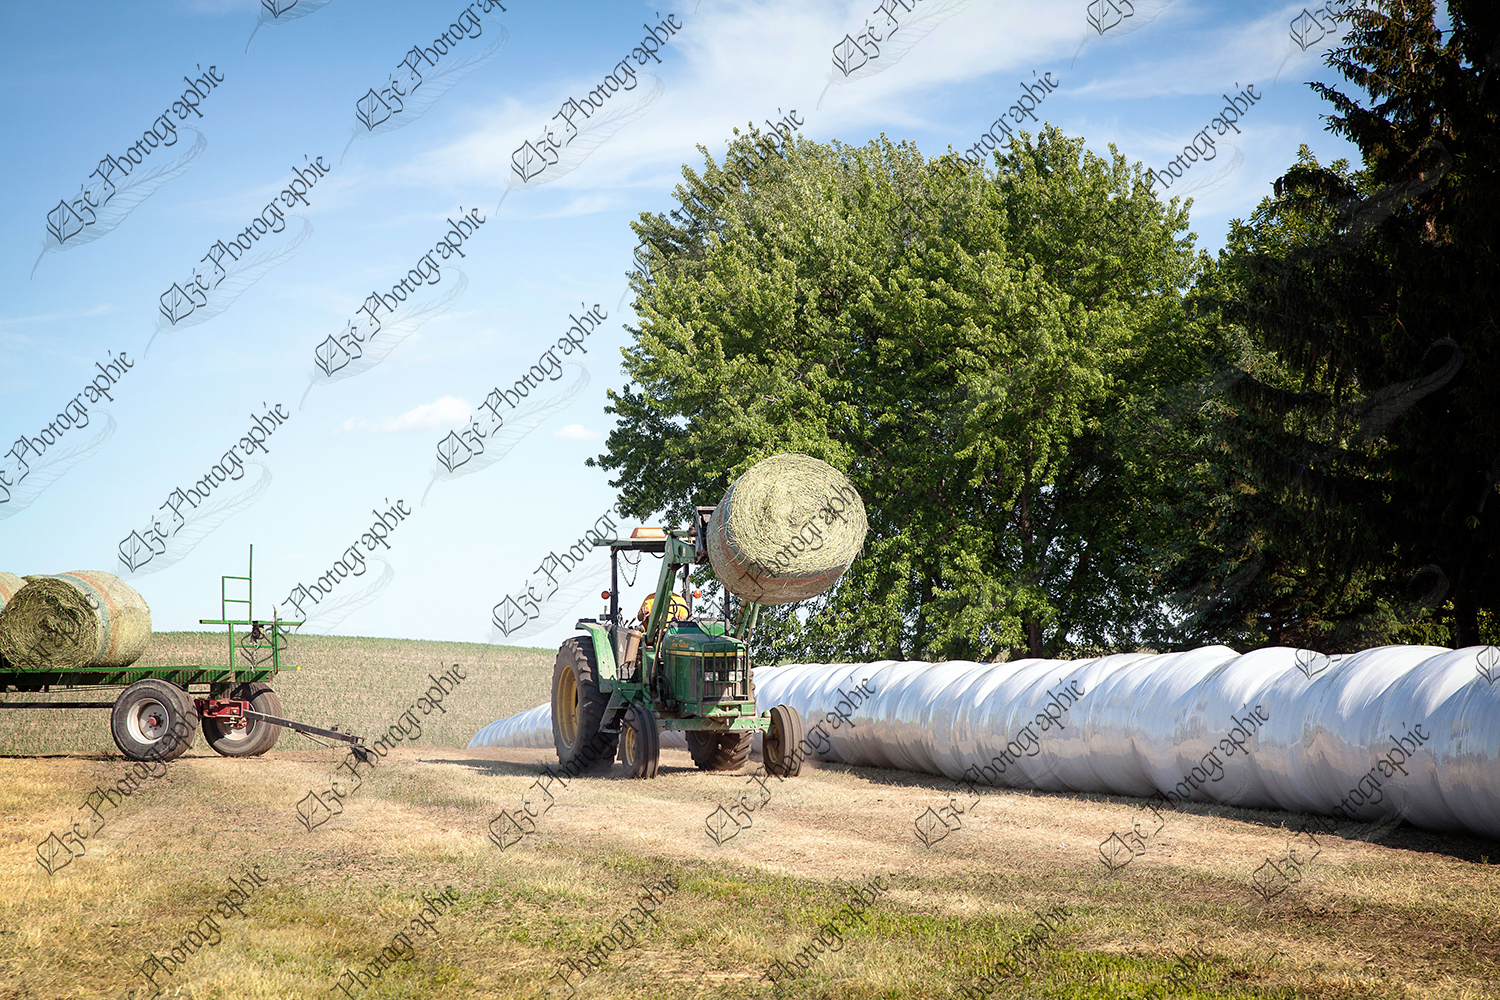 elze_photo_9371_entreposer_foin_tracteur_field_storing_hay